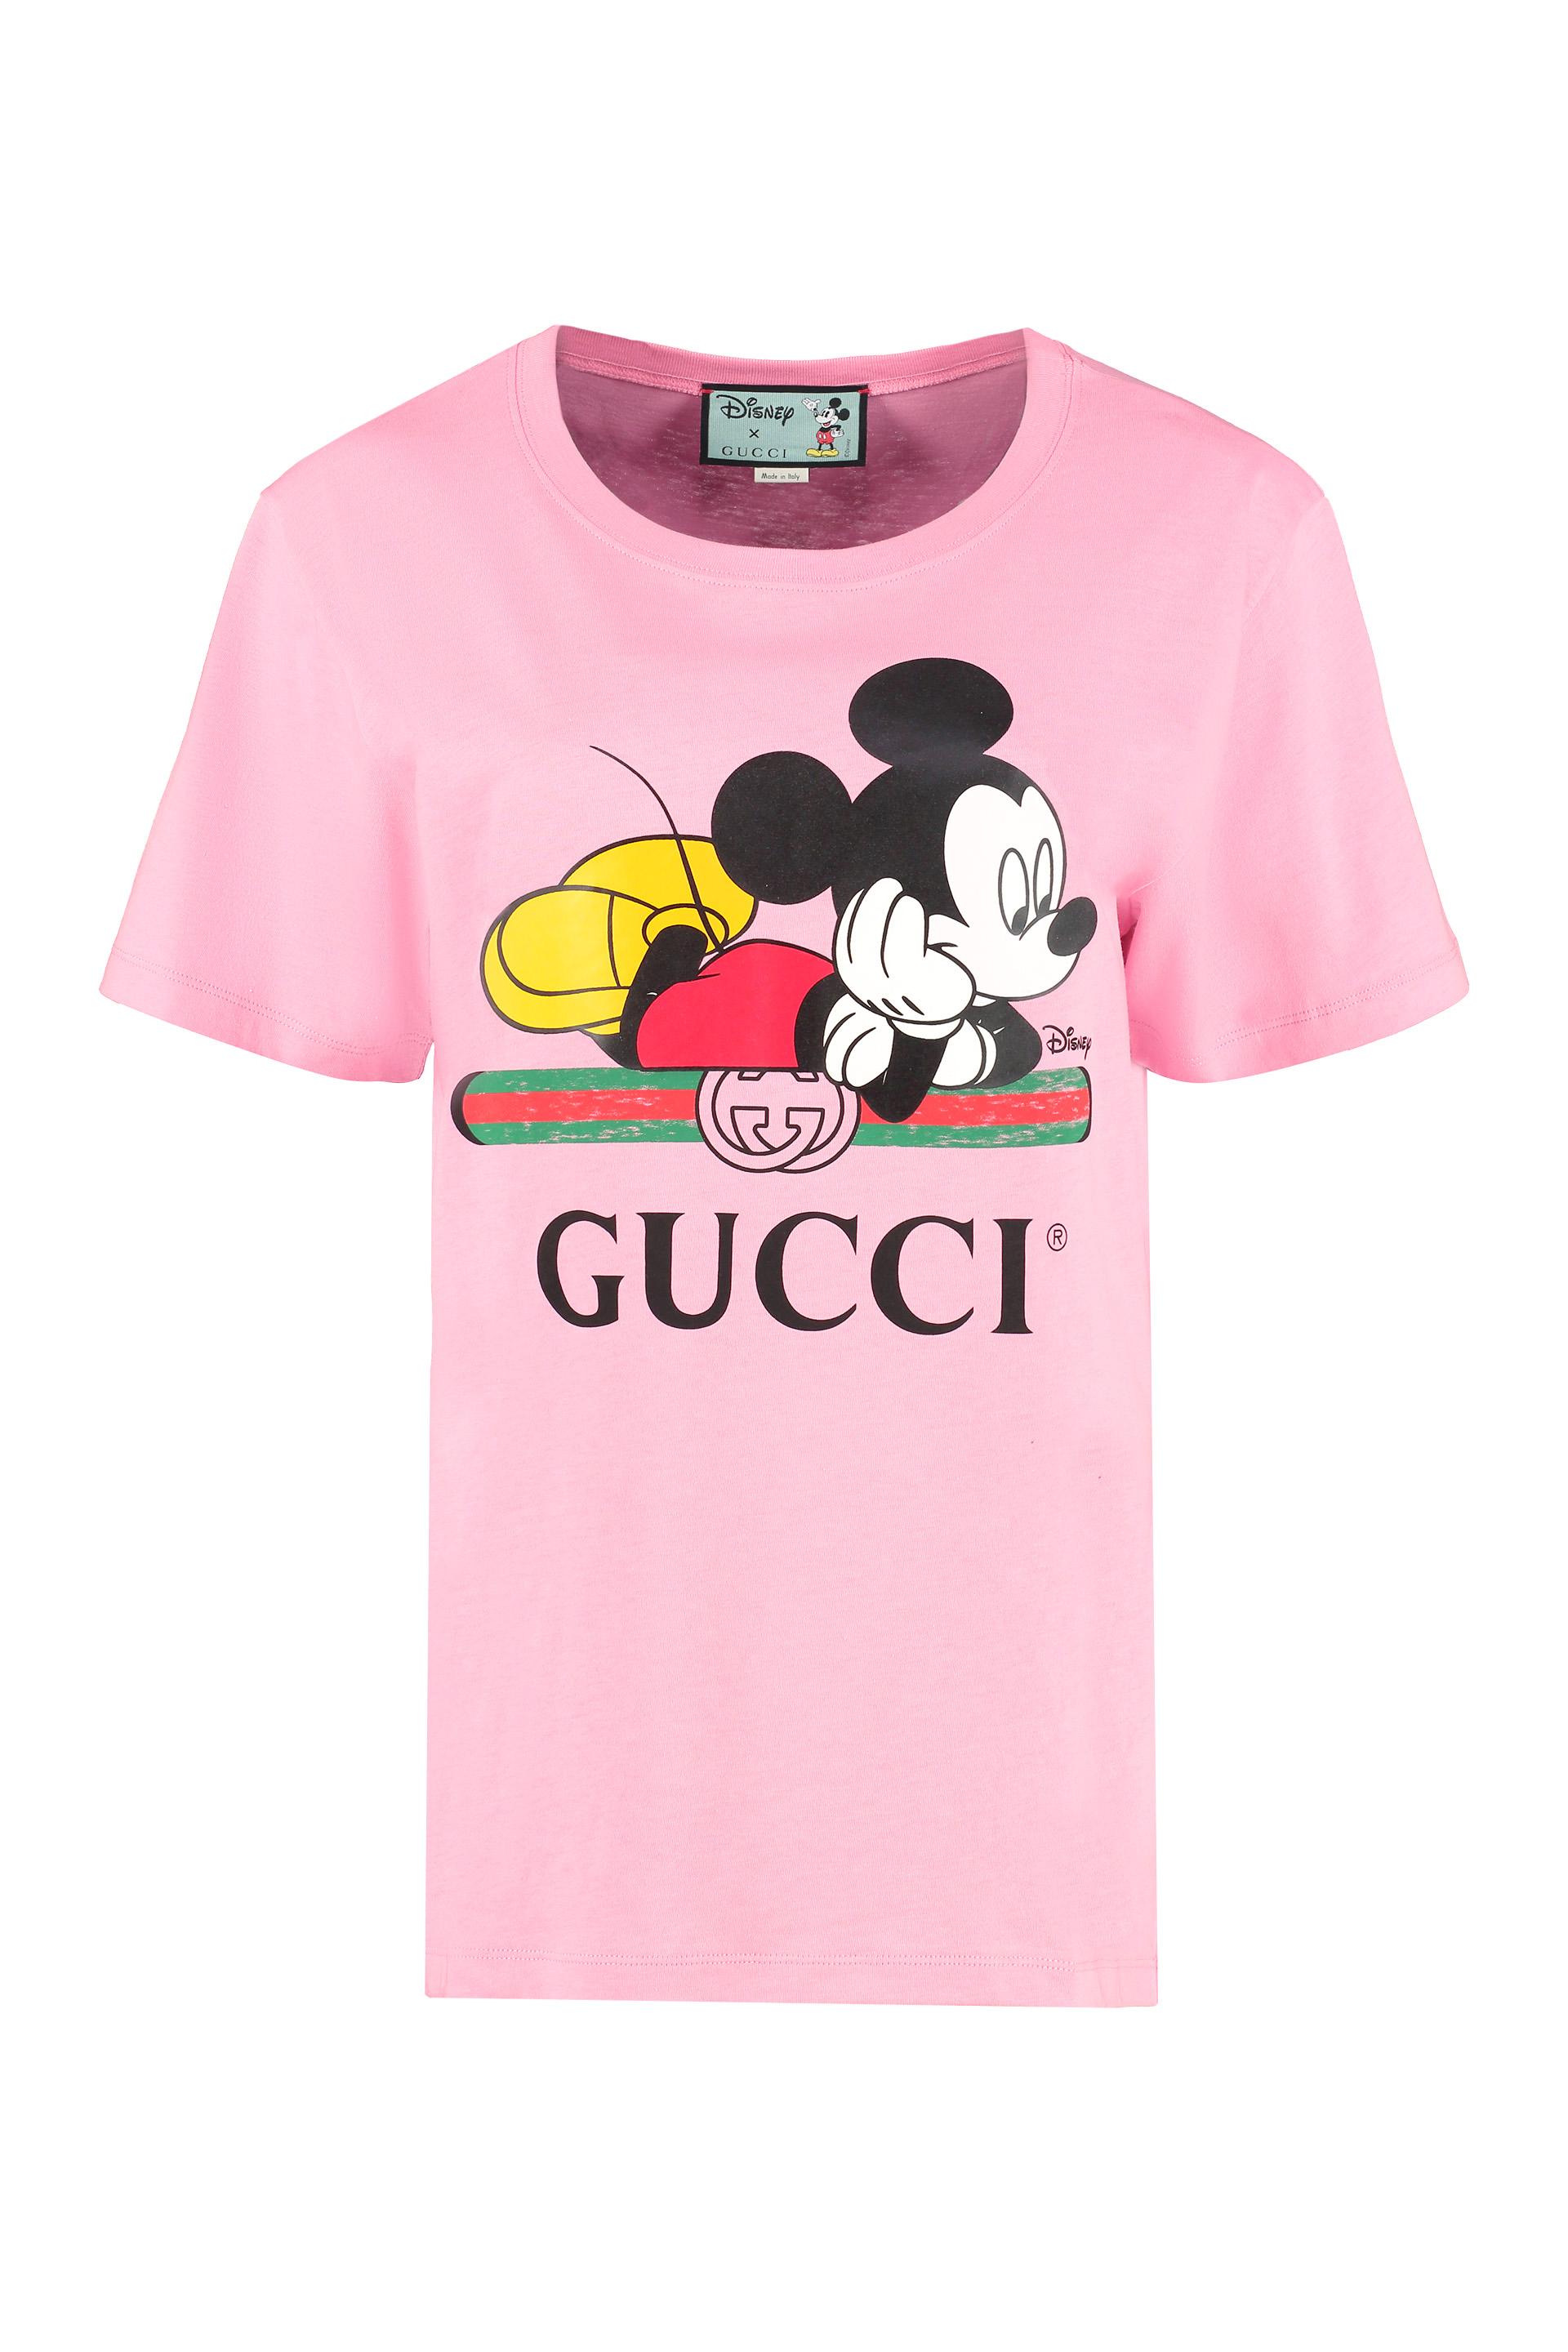 Gucci Cotton Disney X Oversize Tshirt in Pink Lyst